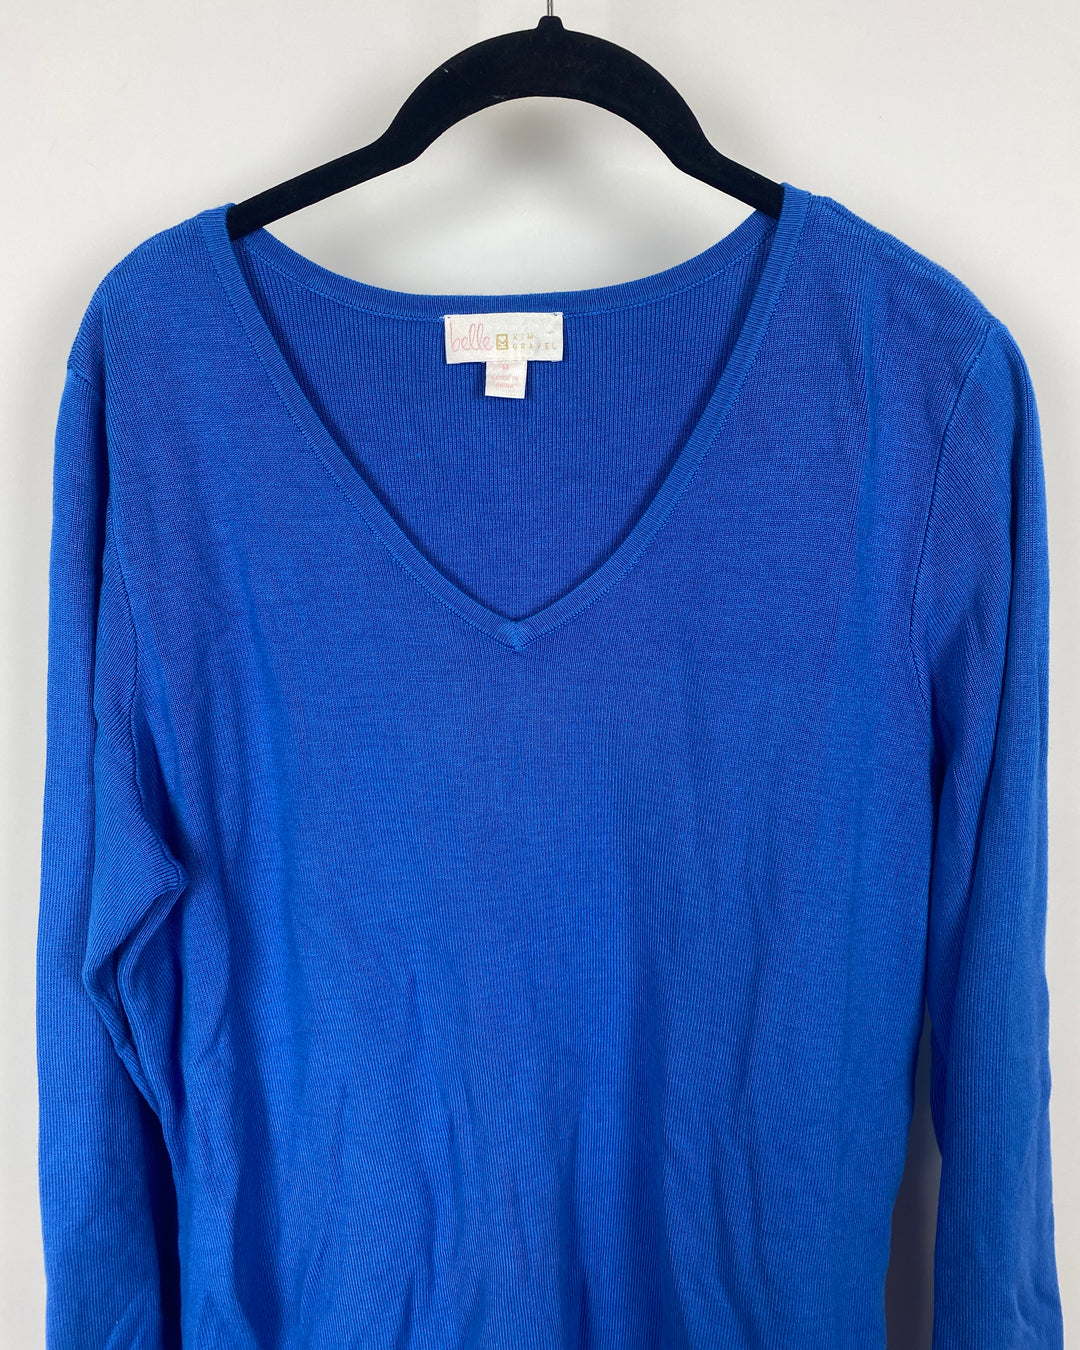 Blue Sweater - Medium/Large